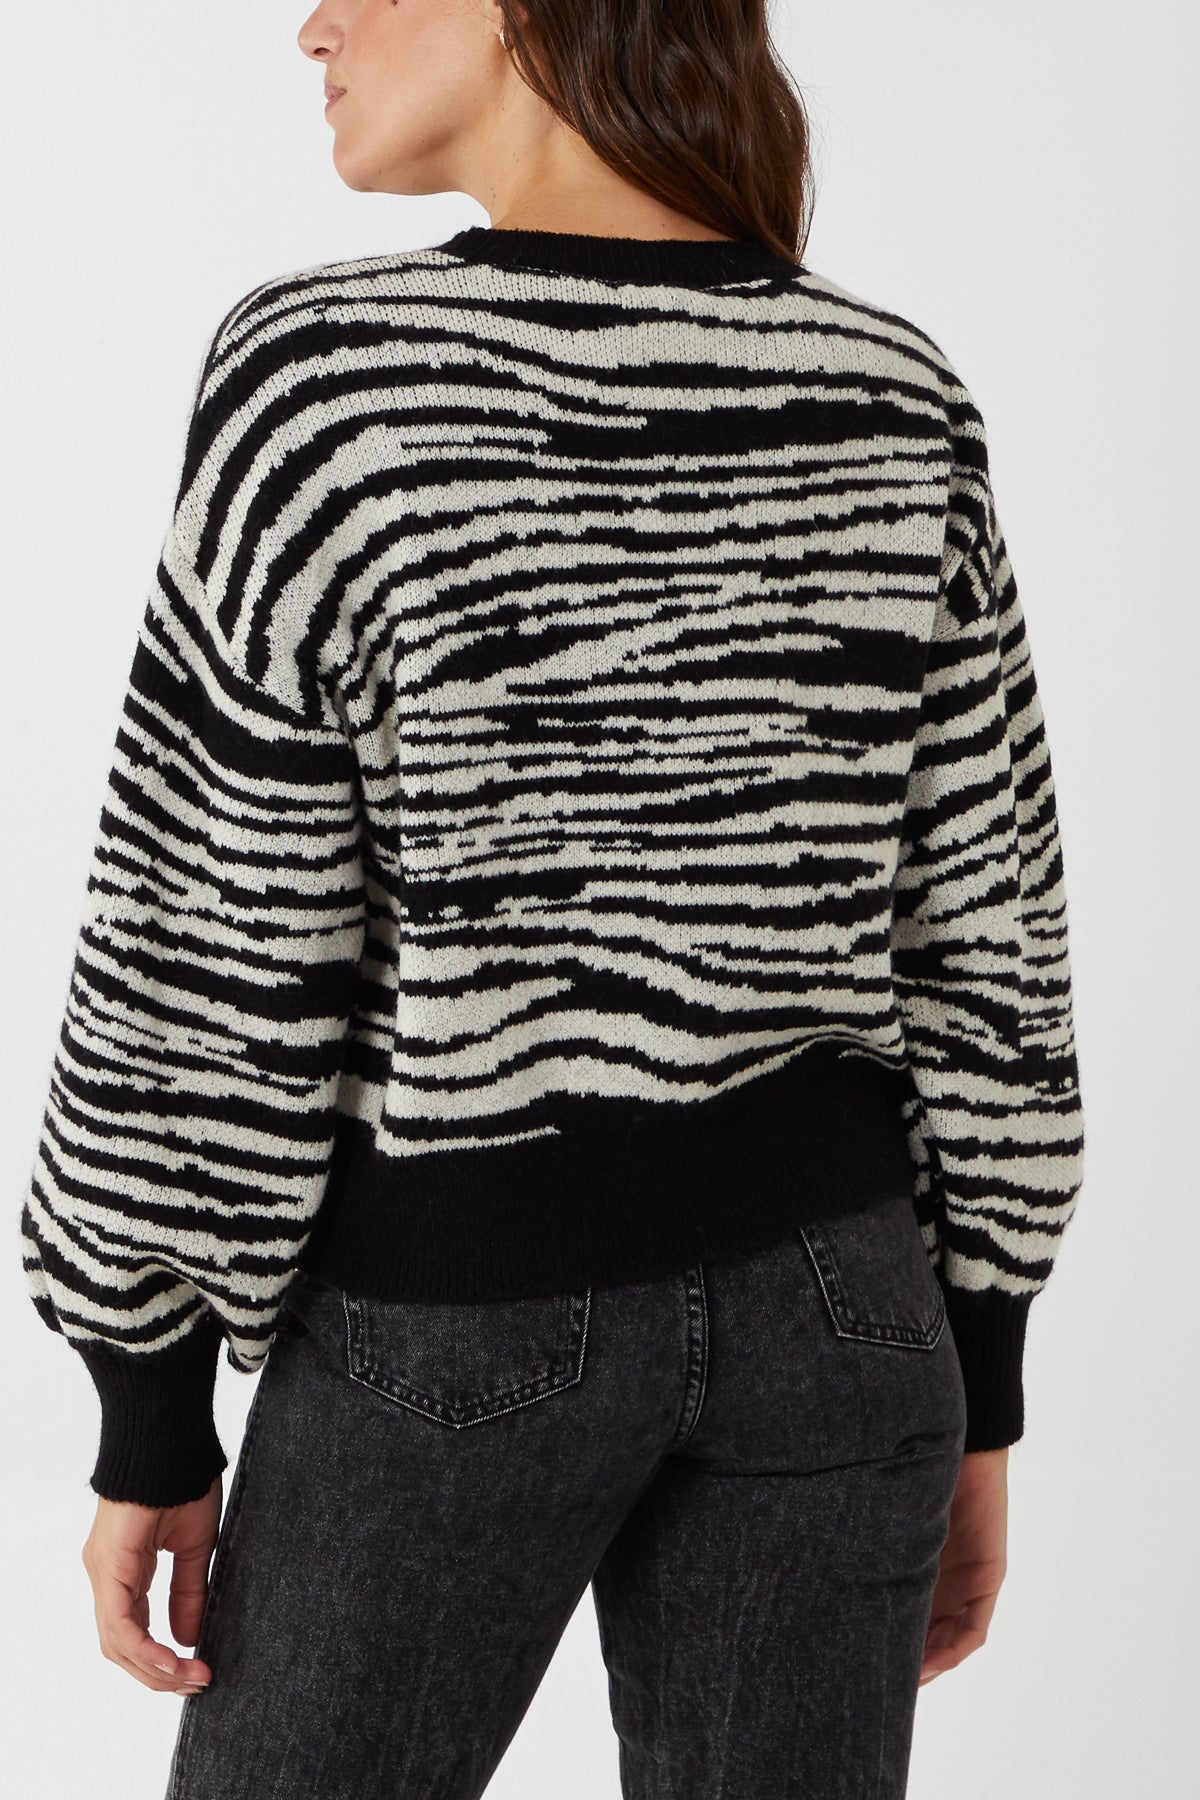 Horizontal Zebra Print Knitted Jumper